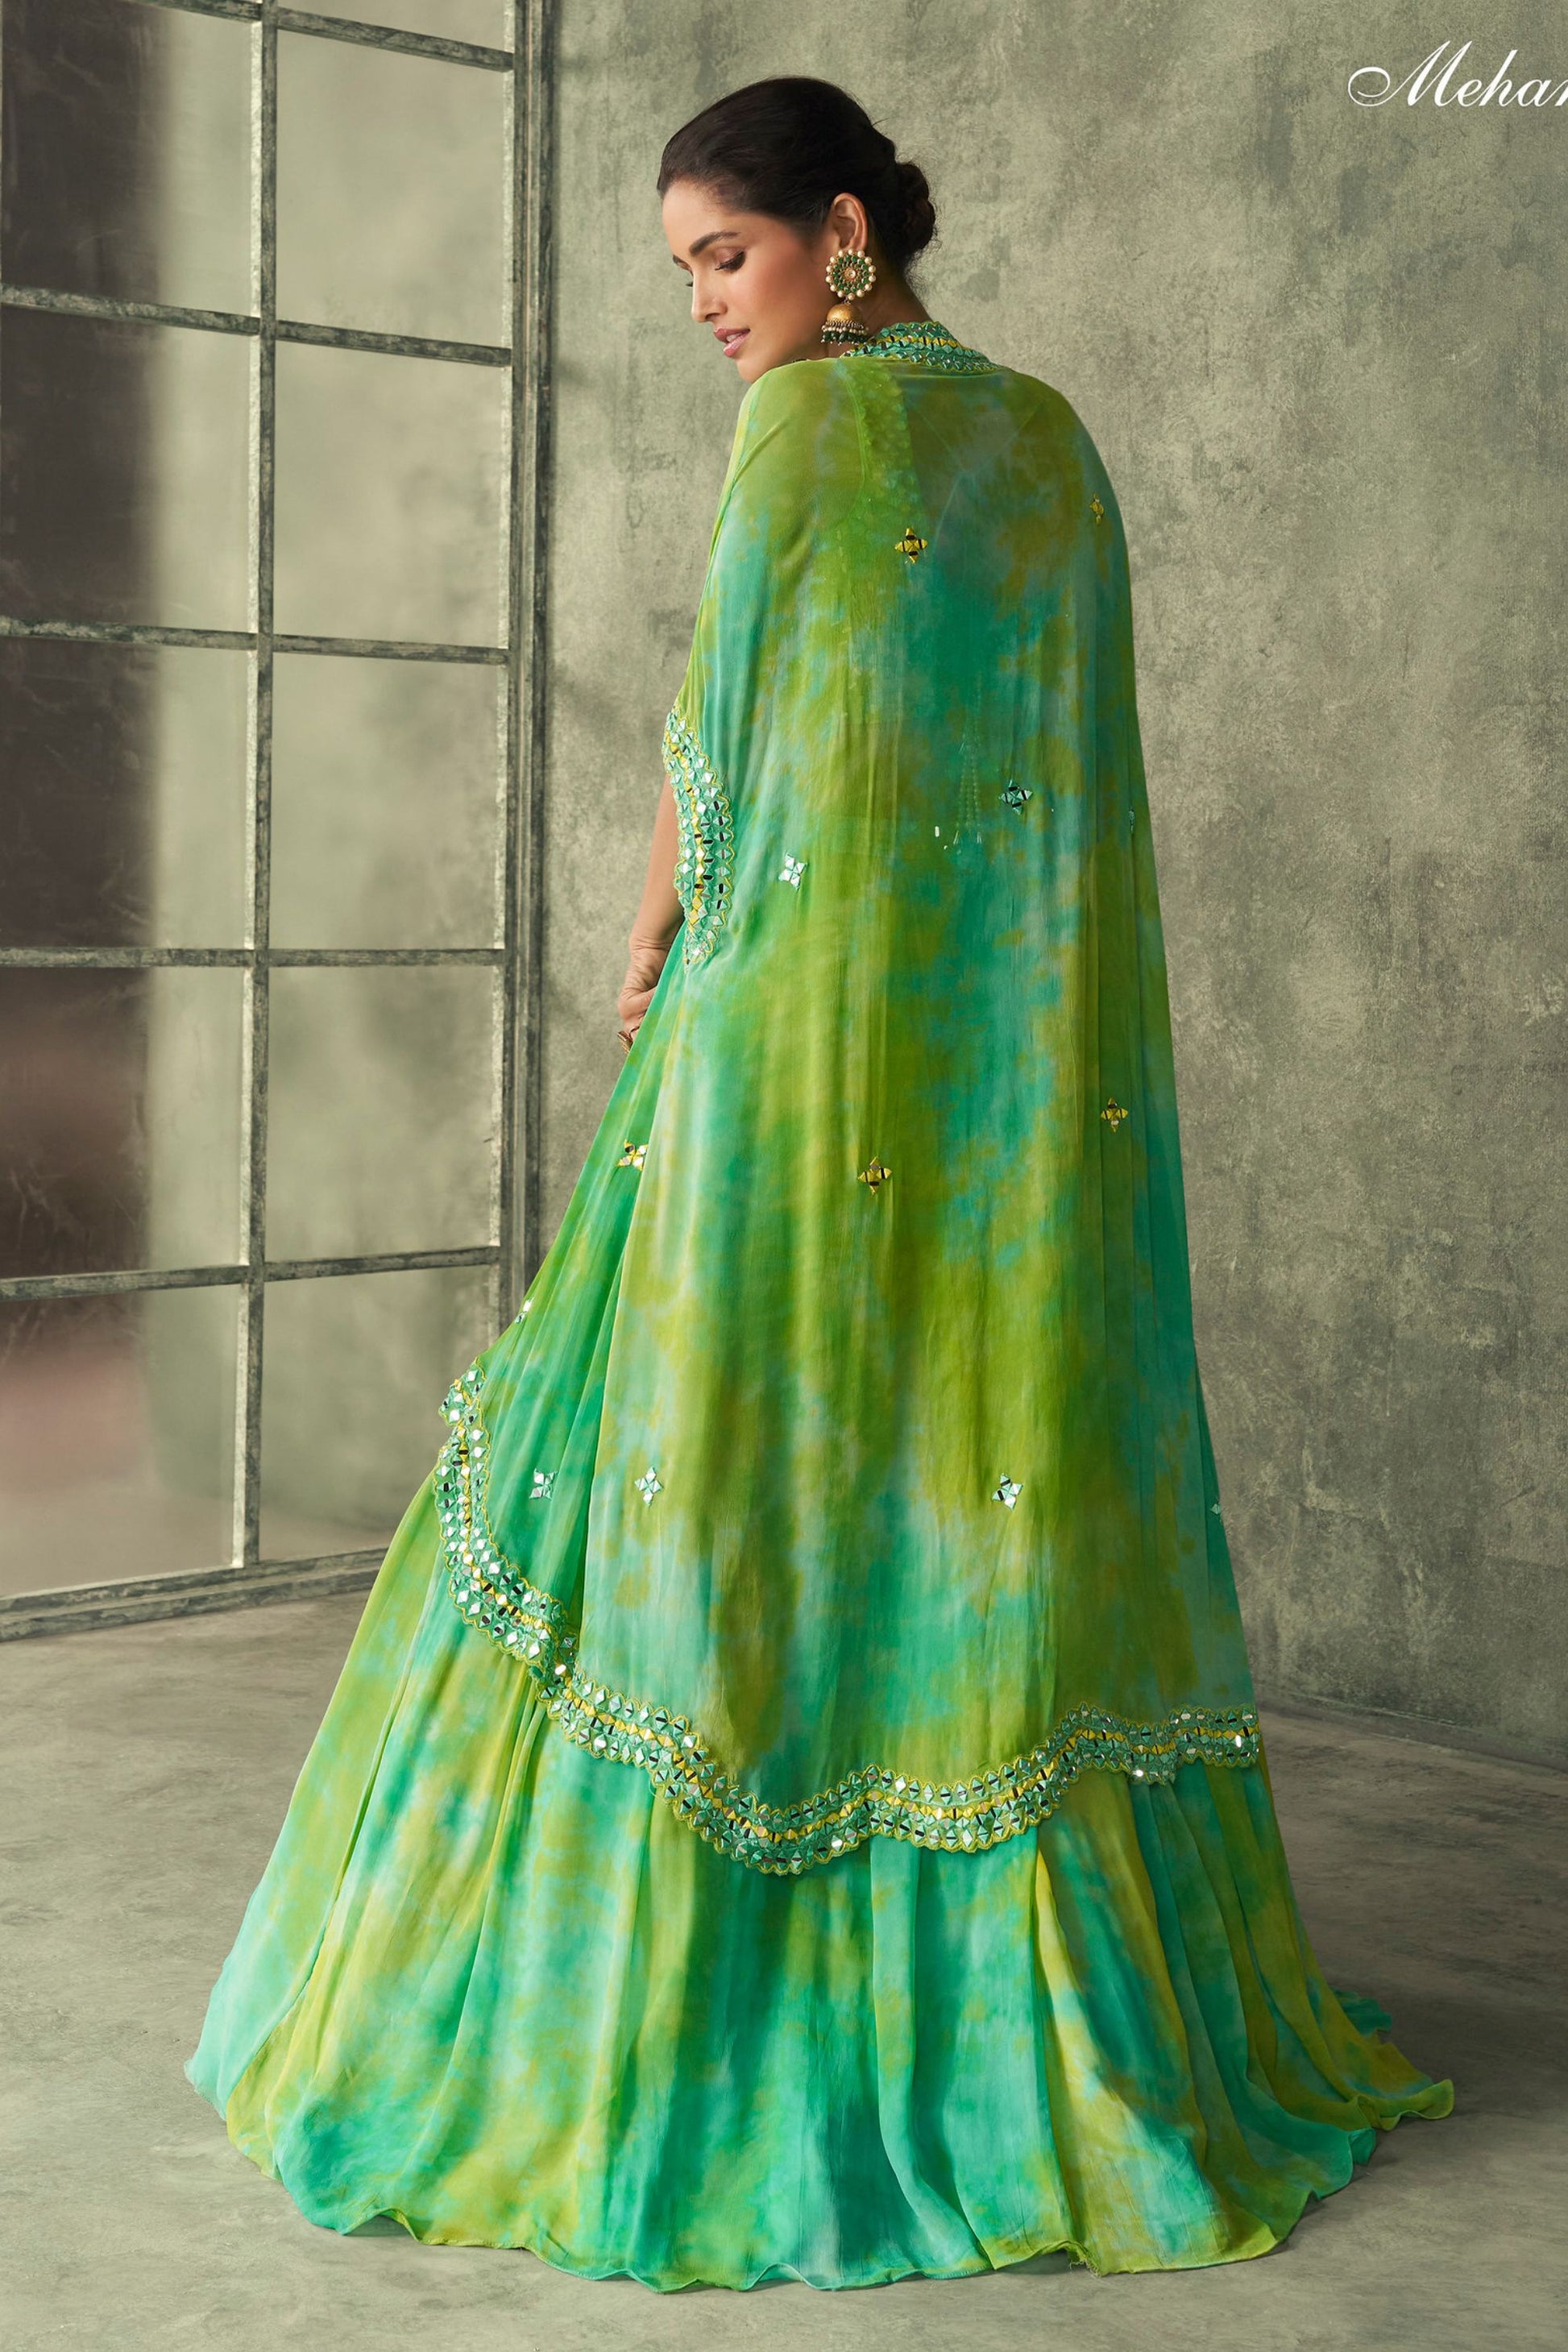 Green Georgette Dual Tone Printed Lehenga Choli For Indian Festivals & Weddings - Print Work, Embroidery Work